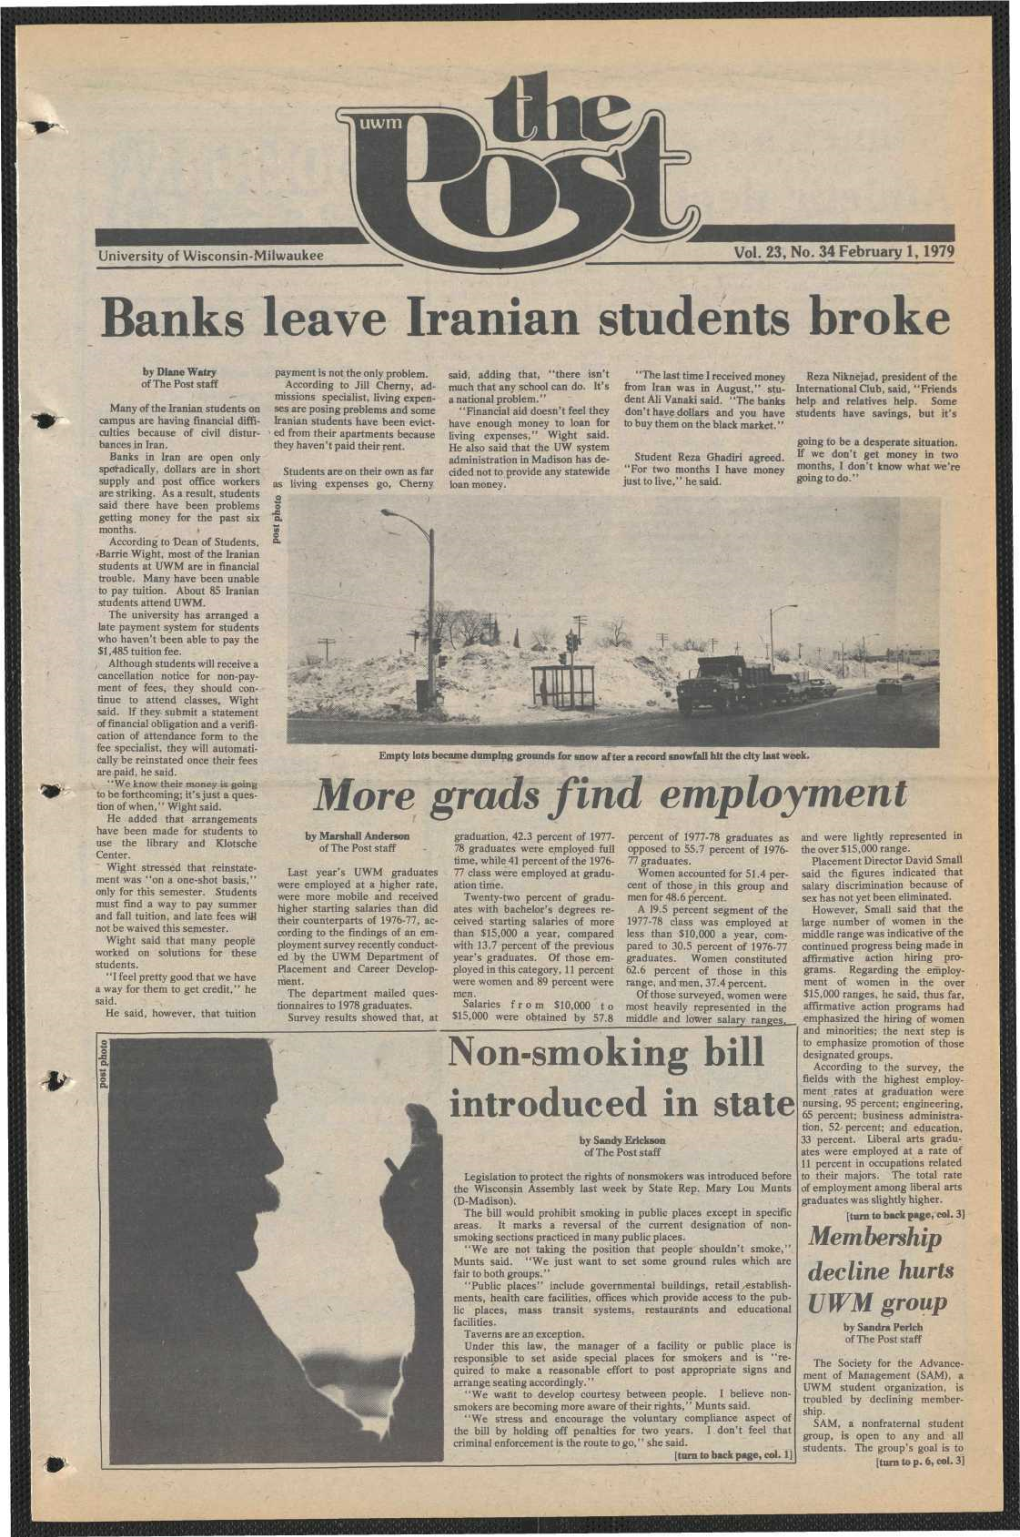 Banks Leave Iranian Students Broke